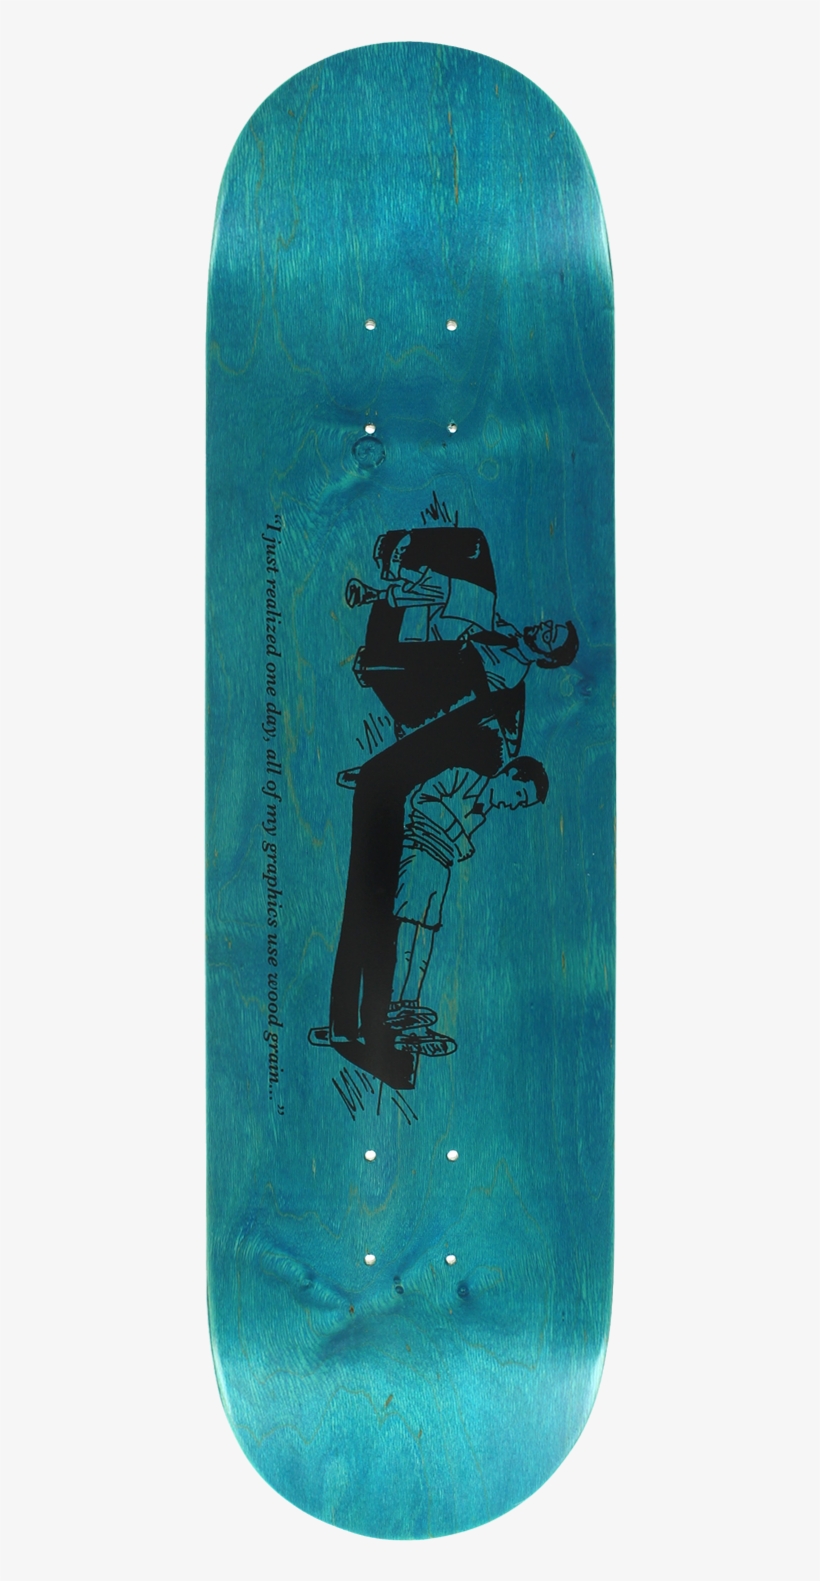 Chocolate Hsu Woodgrain Skateboard Deck - Chocolate Wood Grain Skateboard Deck - Hsu 8.25", transparent png #978640